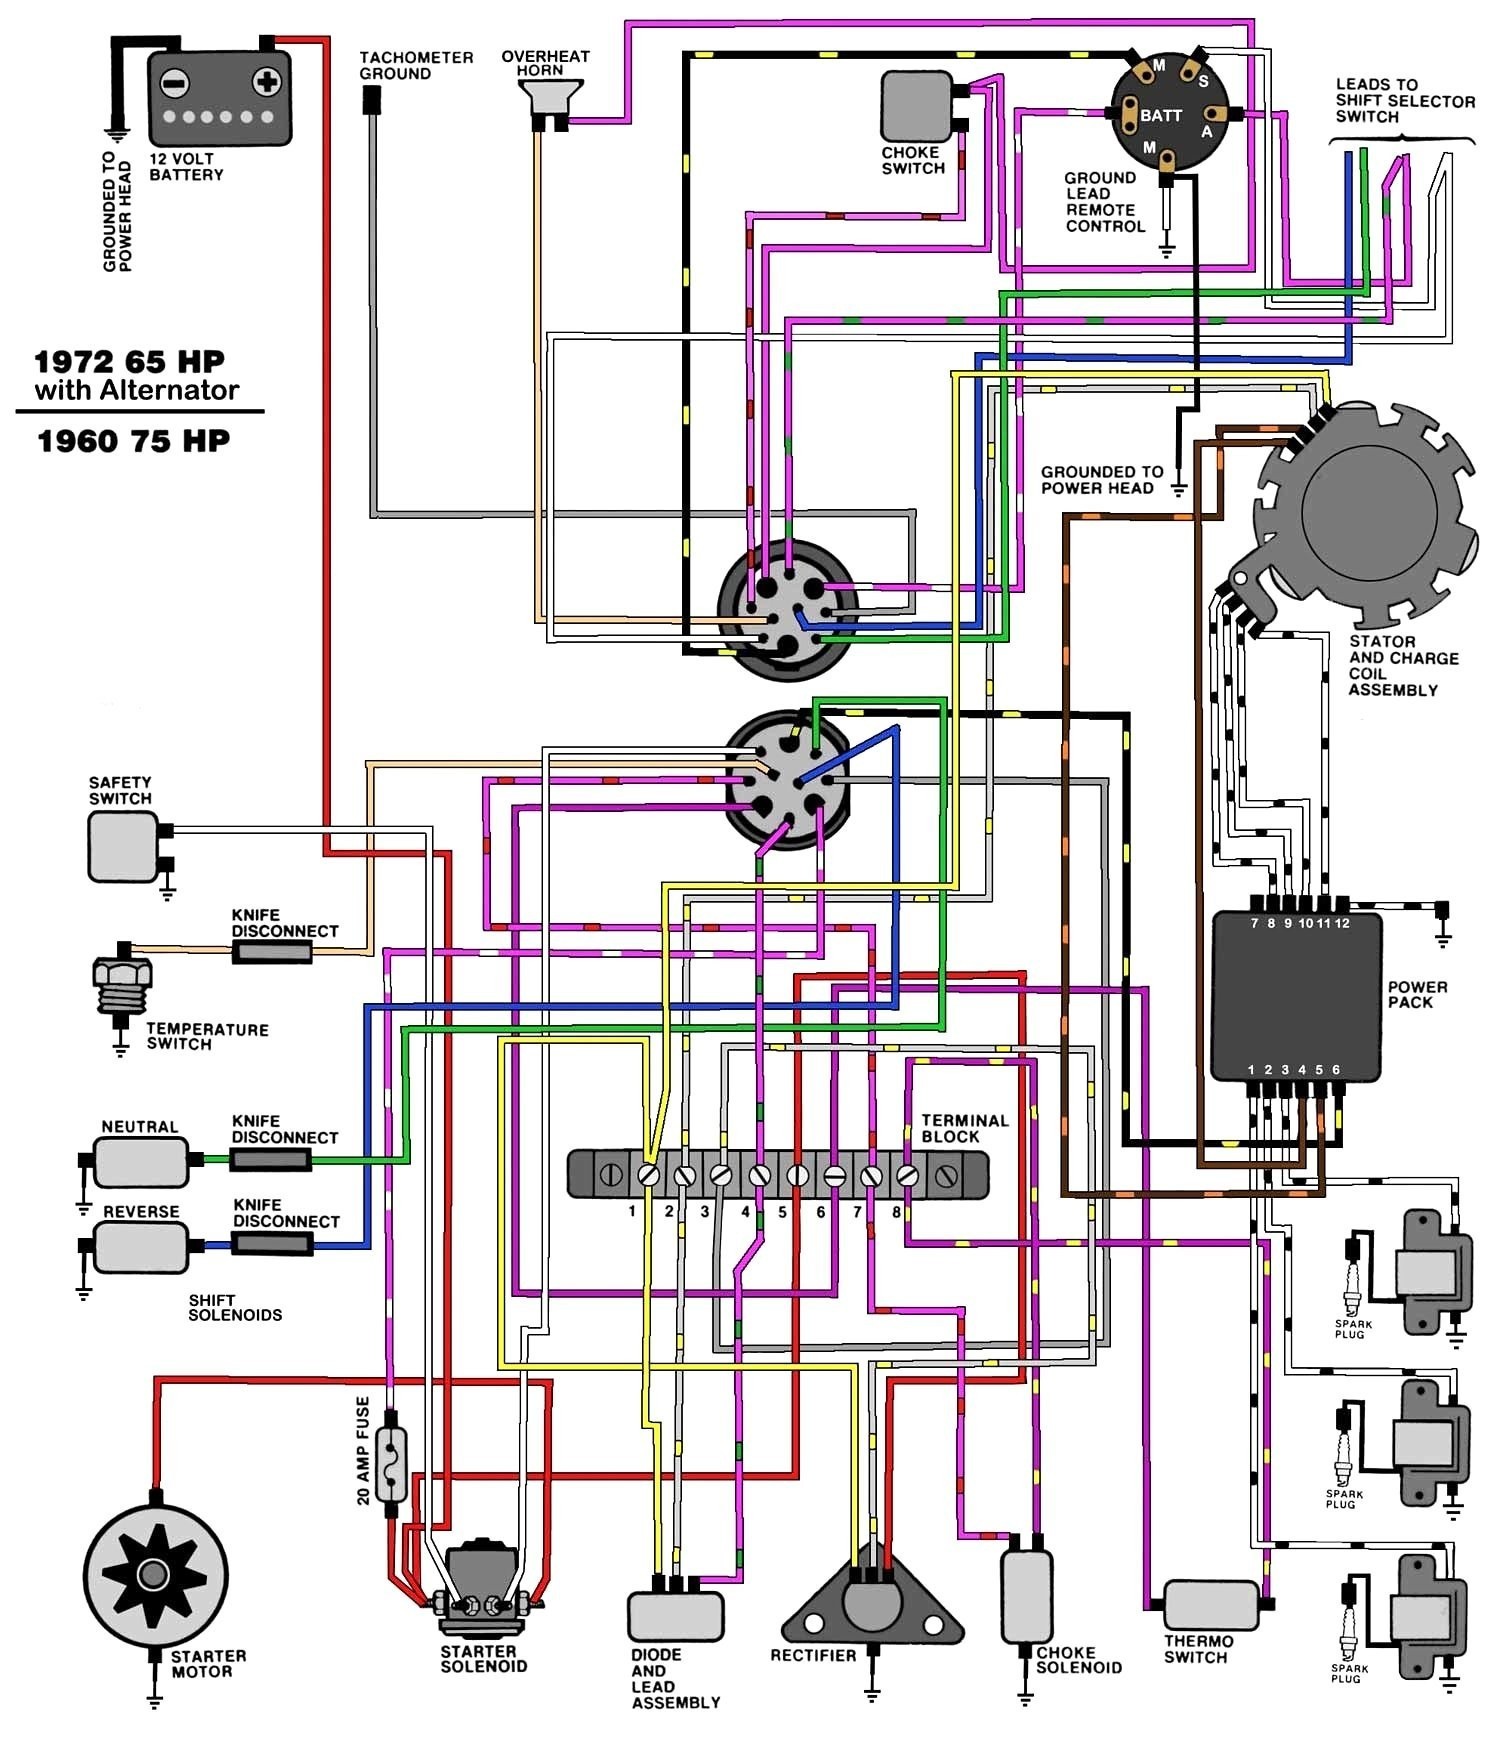 40 Hp Evinrude Parts Diagram 3 Hp Evinrude Outboard Wiring Diagram Wiring Diagram Services • Of 40 Hp Evinrude Parts Diagram